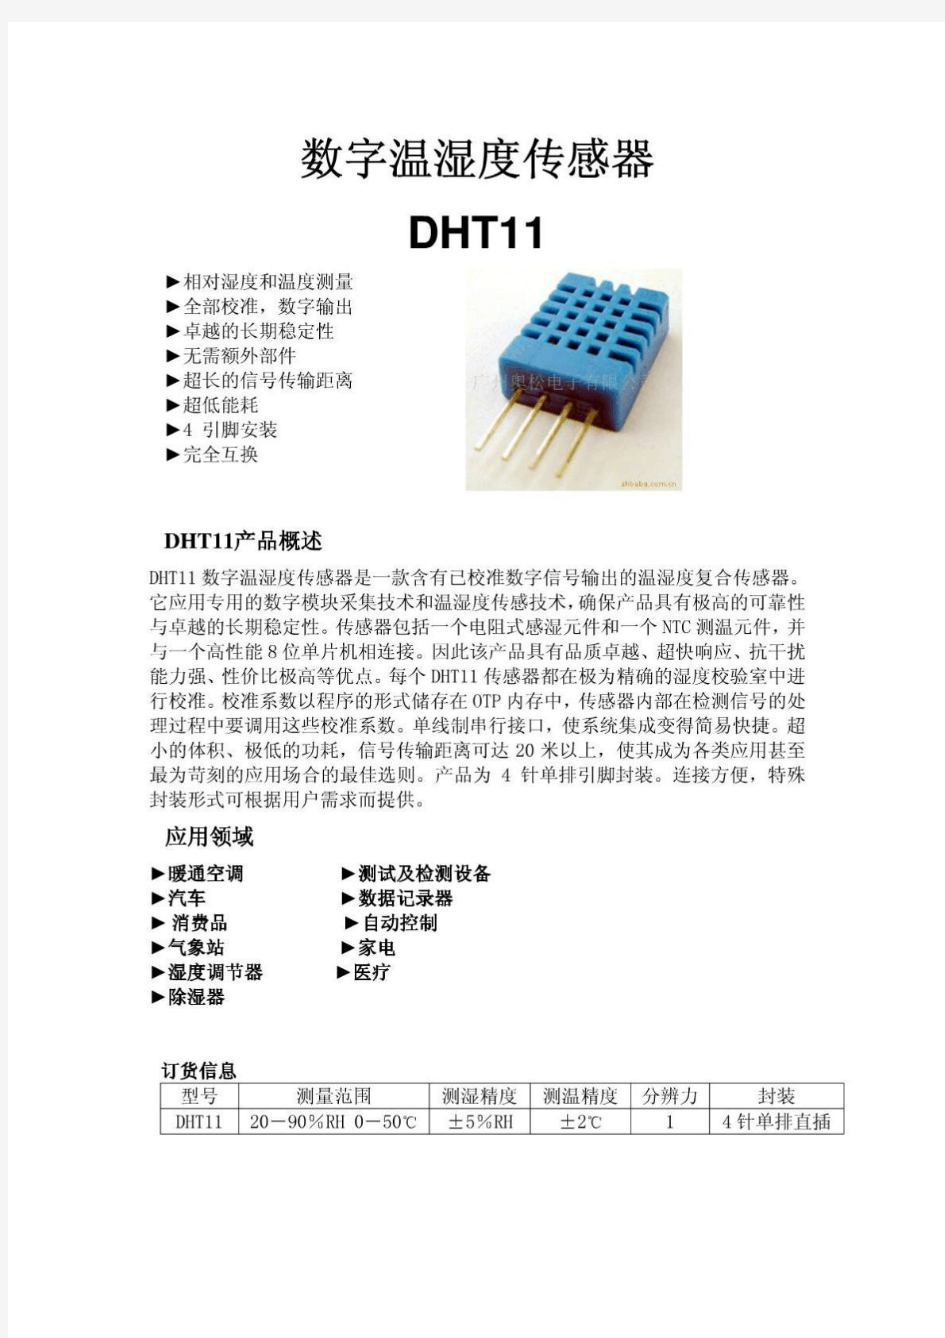 DHT11中文资料C语言例程 温湿度传感器